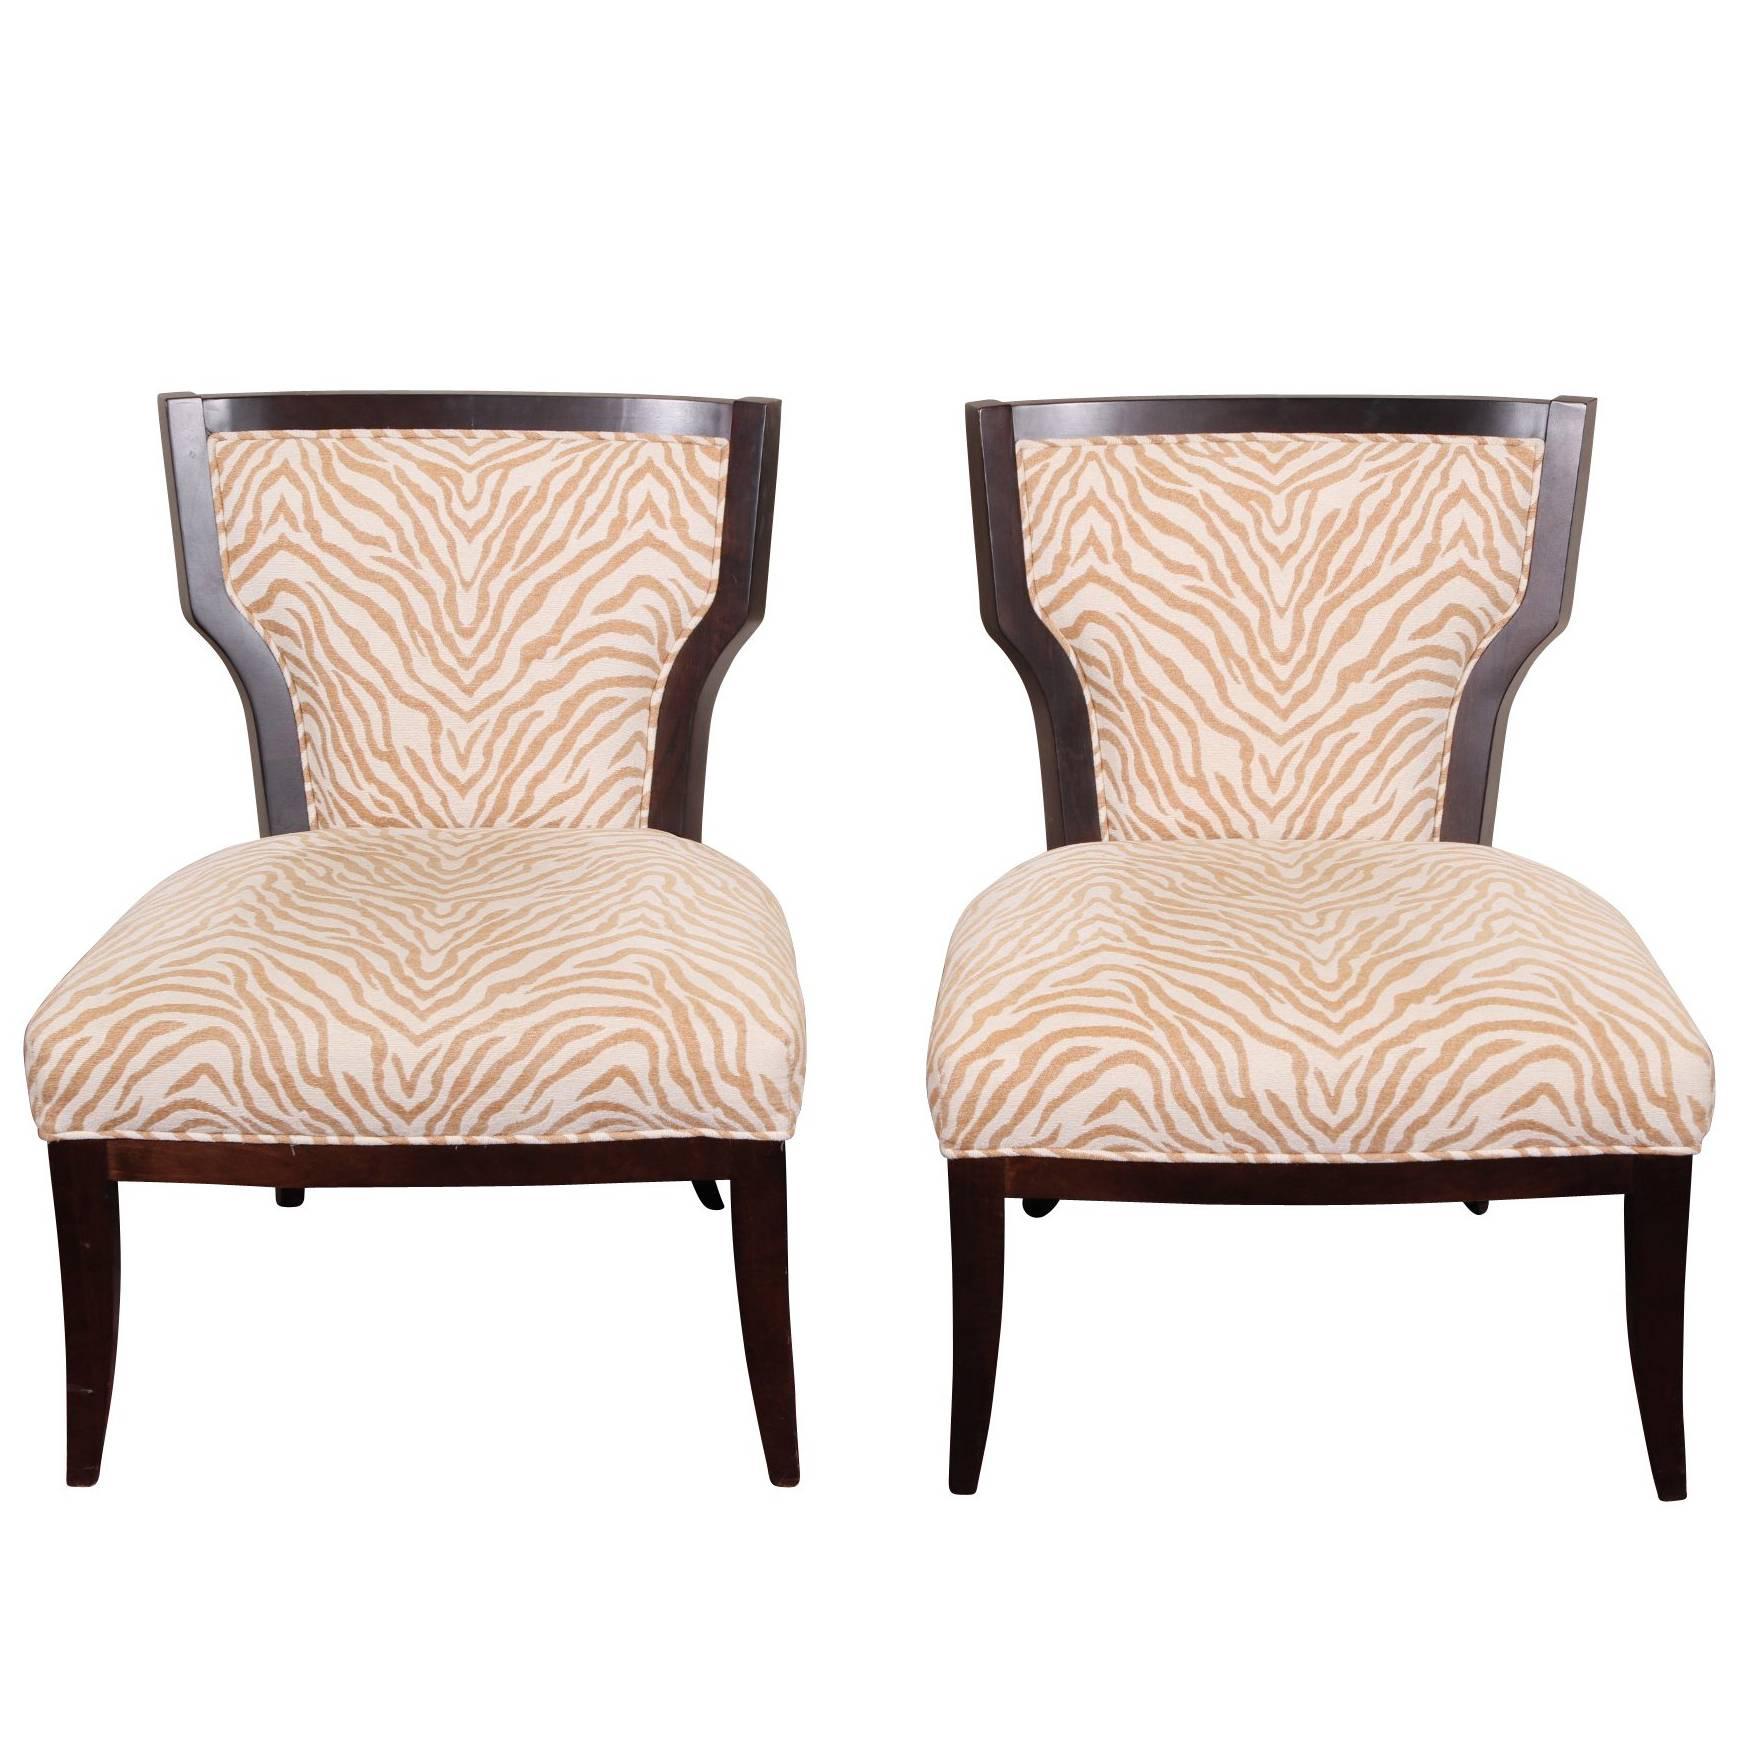 Pair of Zebra Print Lounge Chairs